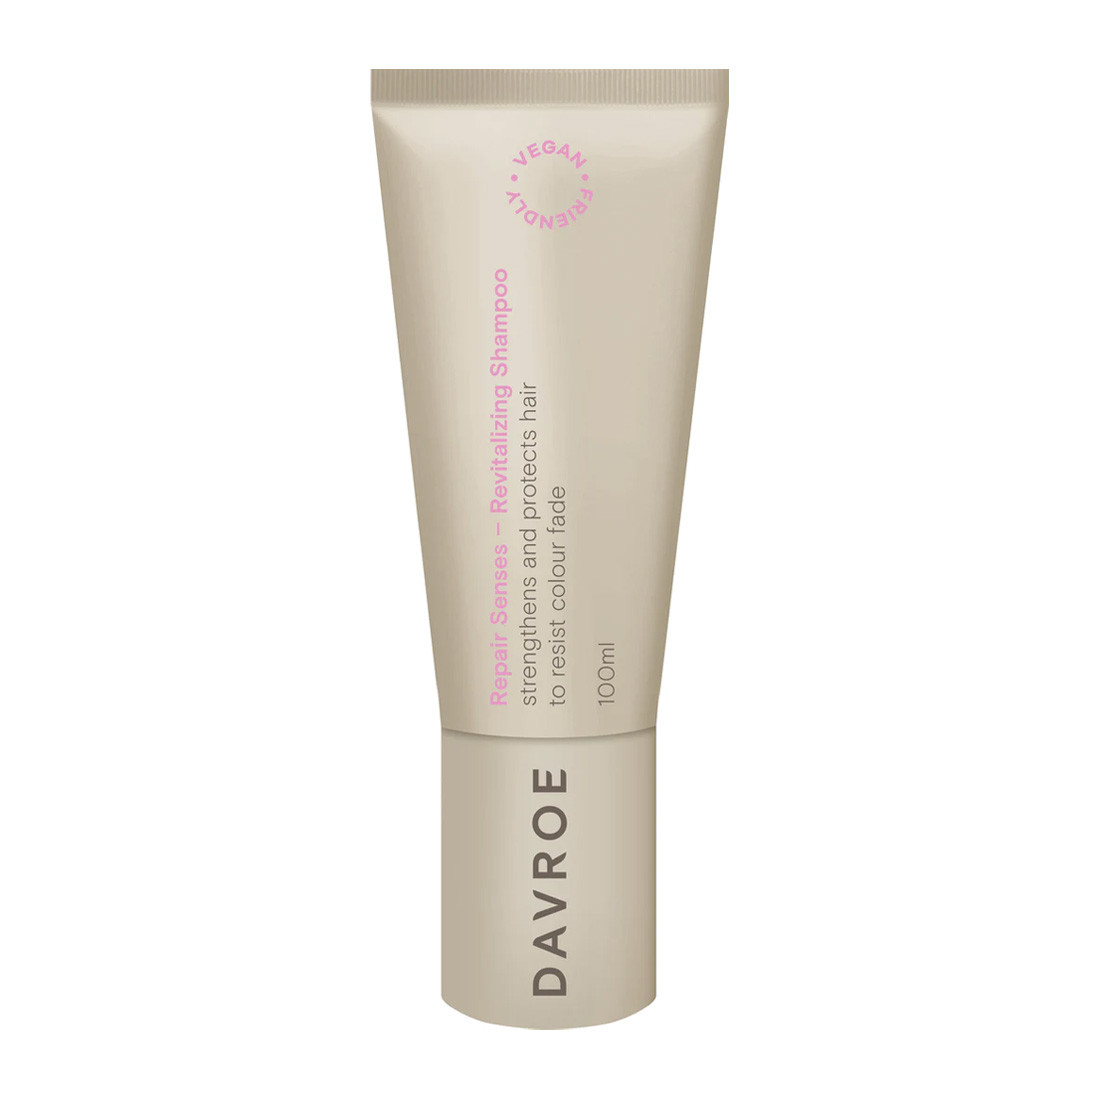 Davroe Repair Senses Revitalizing Shampoo - Восстанавливающий шампунь для волос